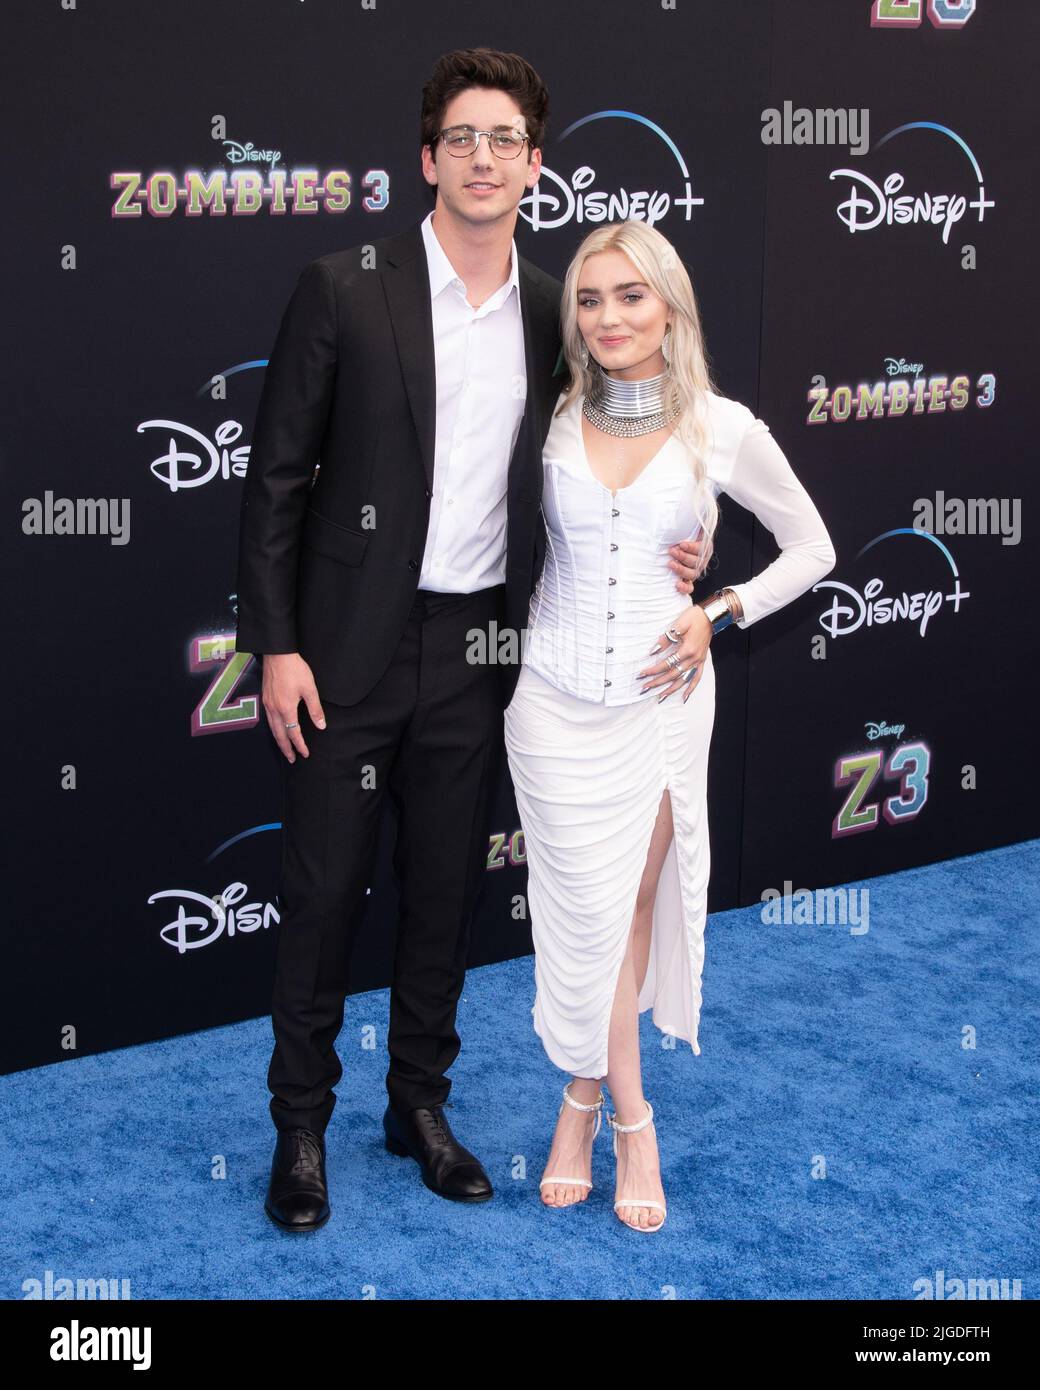 Disney's 'Zombies' Stars Milo Manheim and Meg Donnelly Share